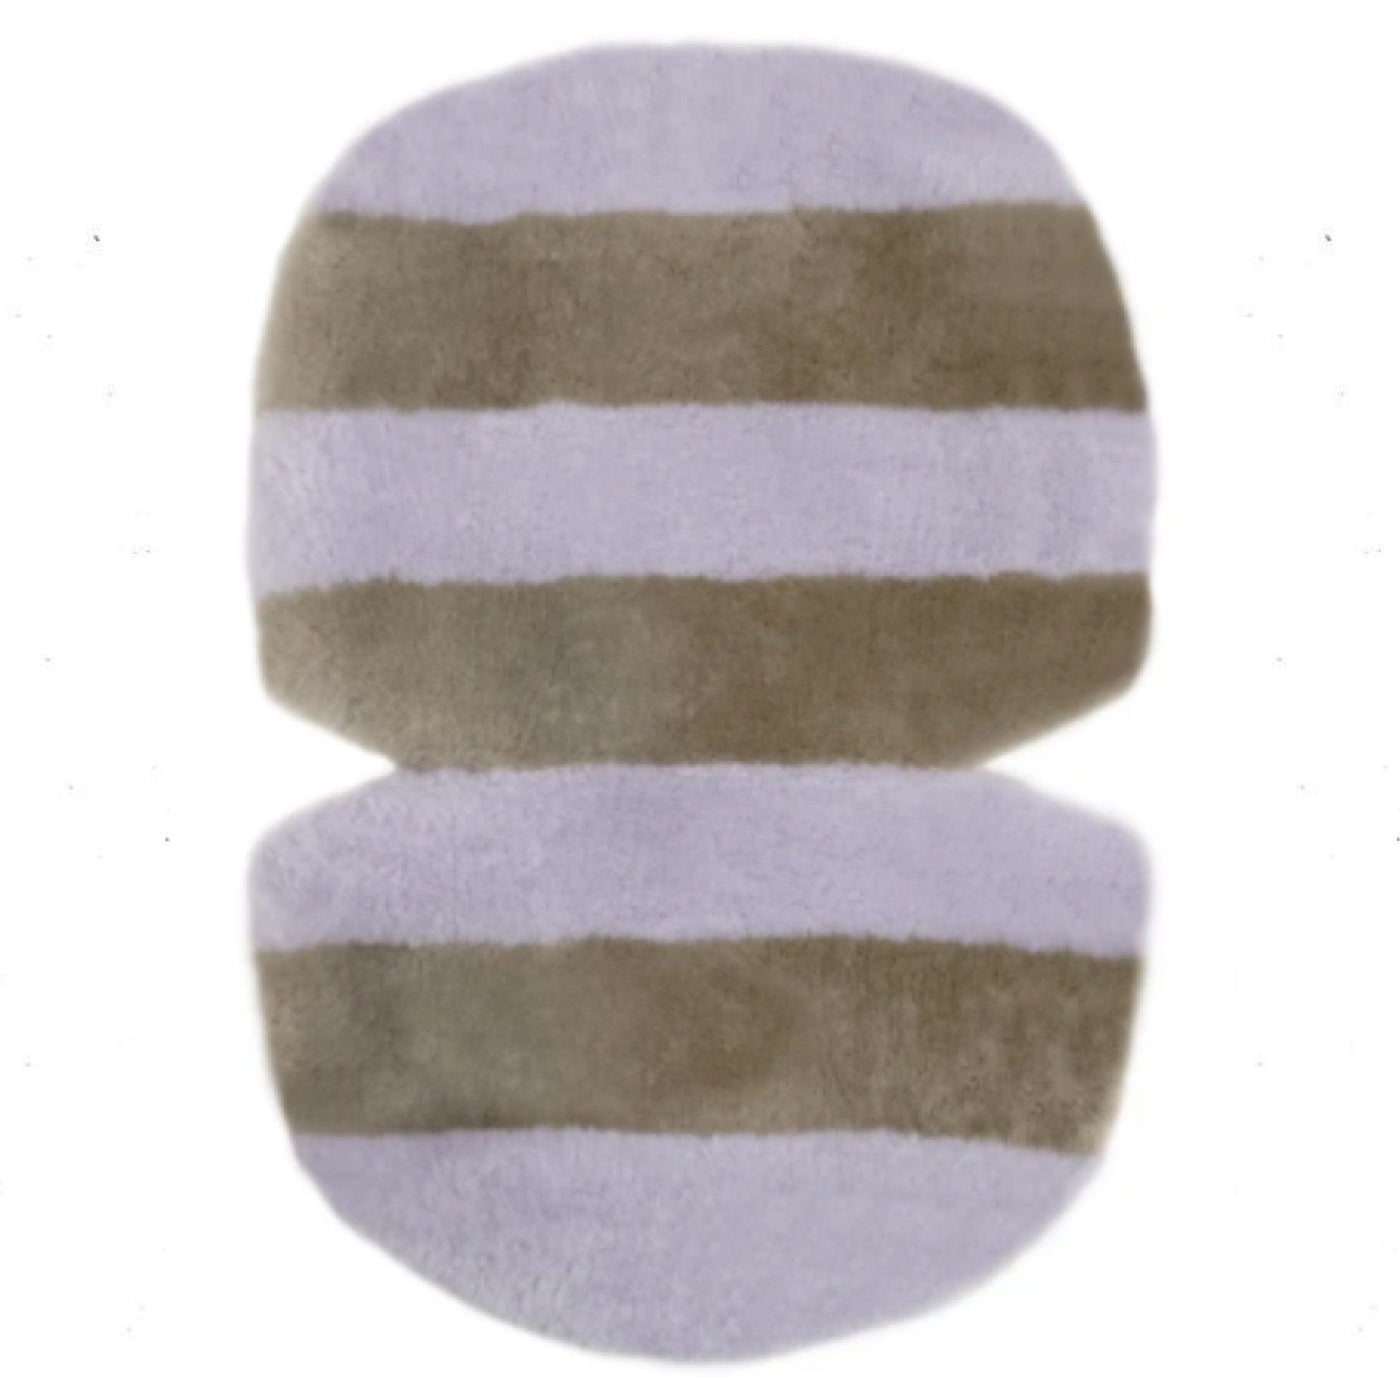 Snuggler stripes: half moon & violet toastie